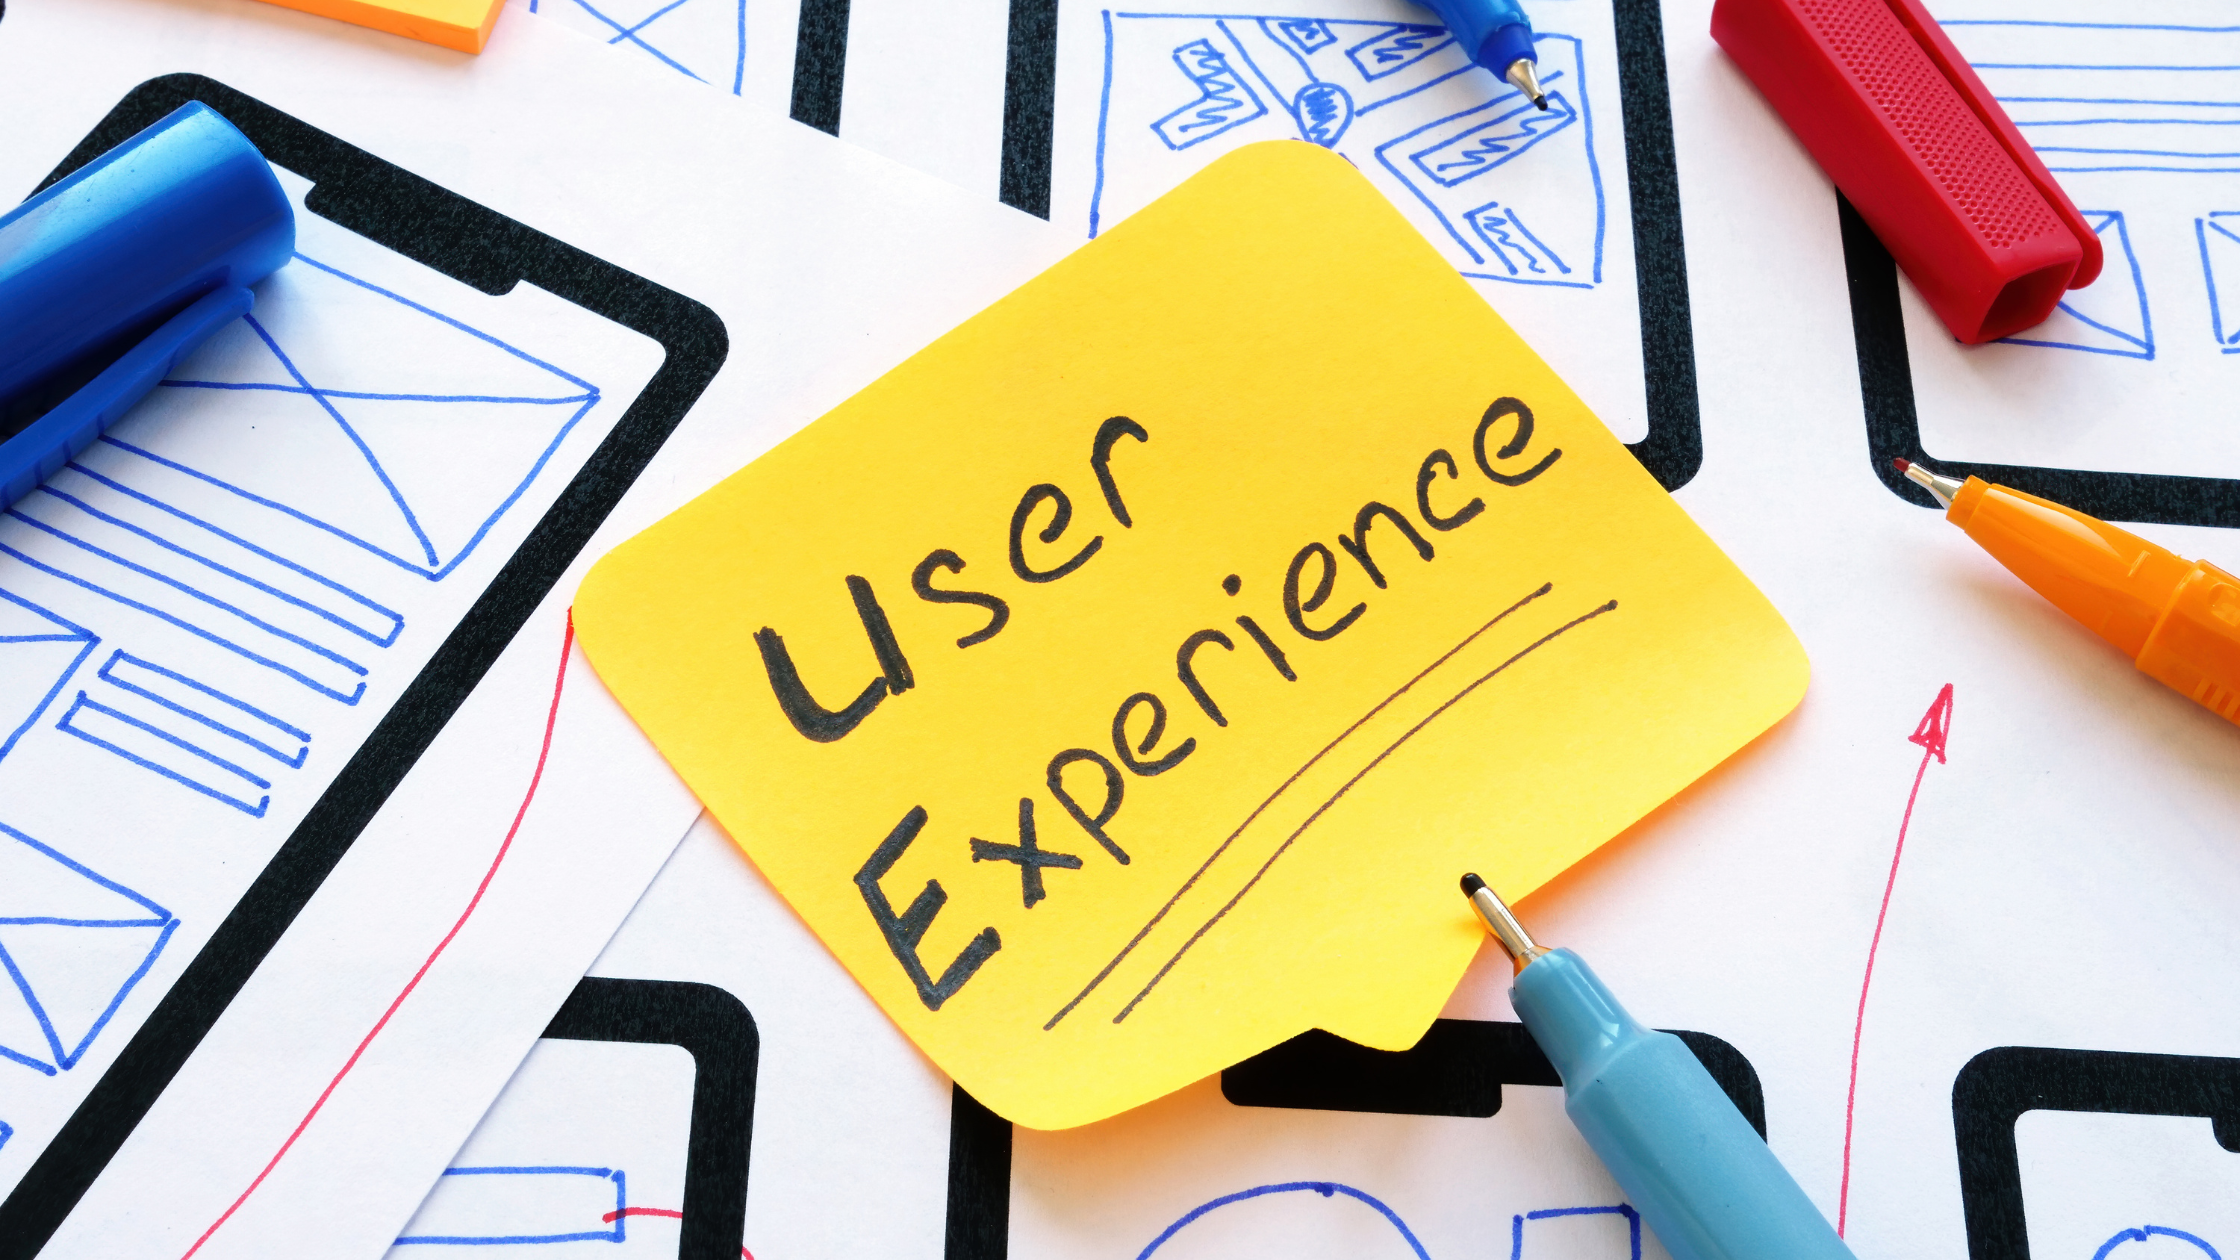 Brand experience, users, digital marketing tips